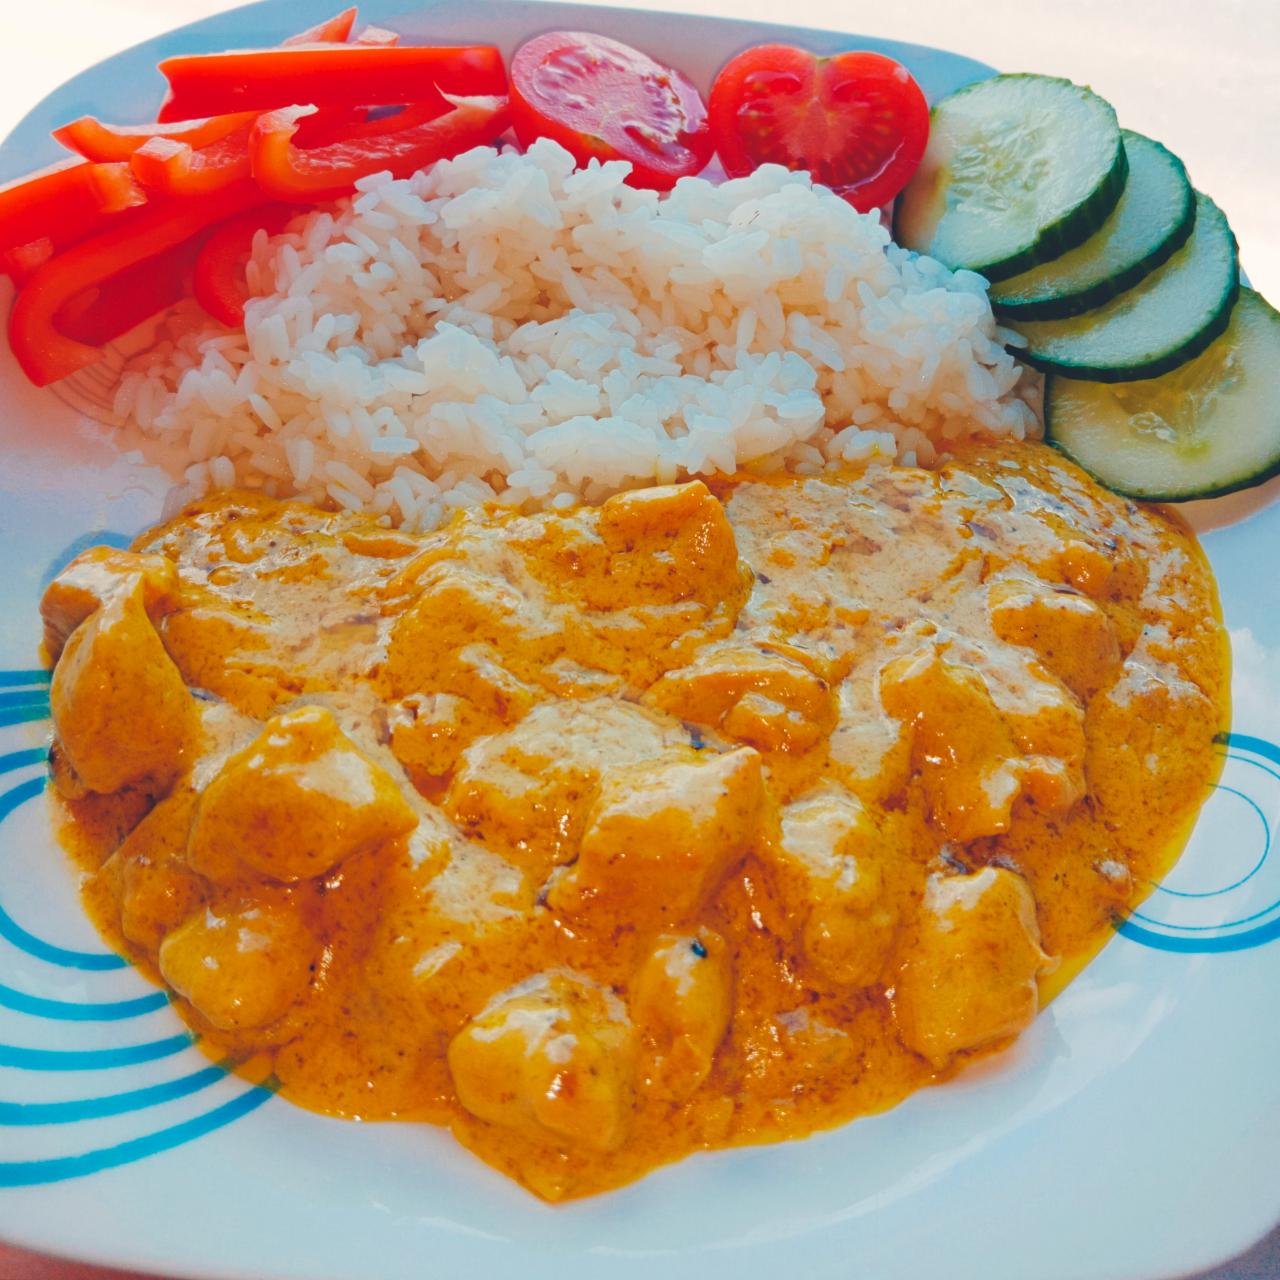 Képek - csirke curry rizzsel